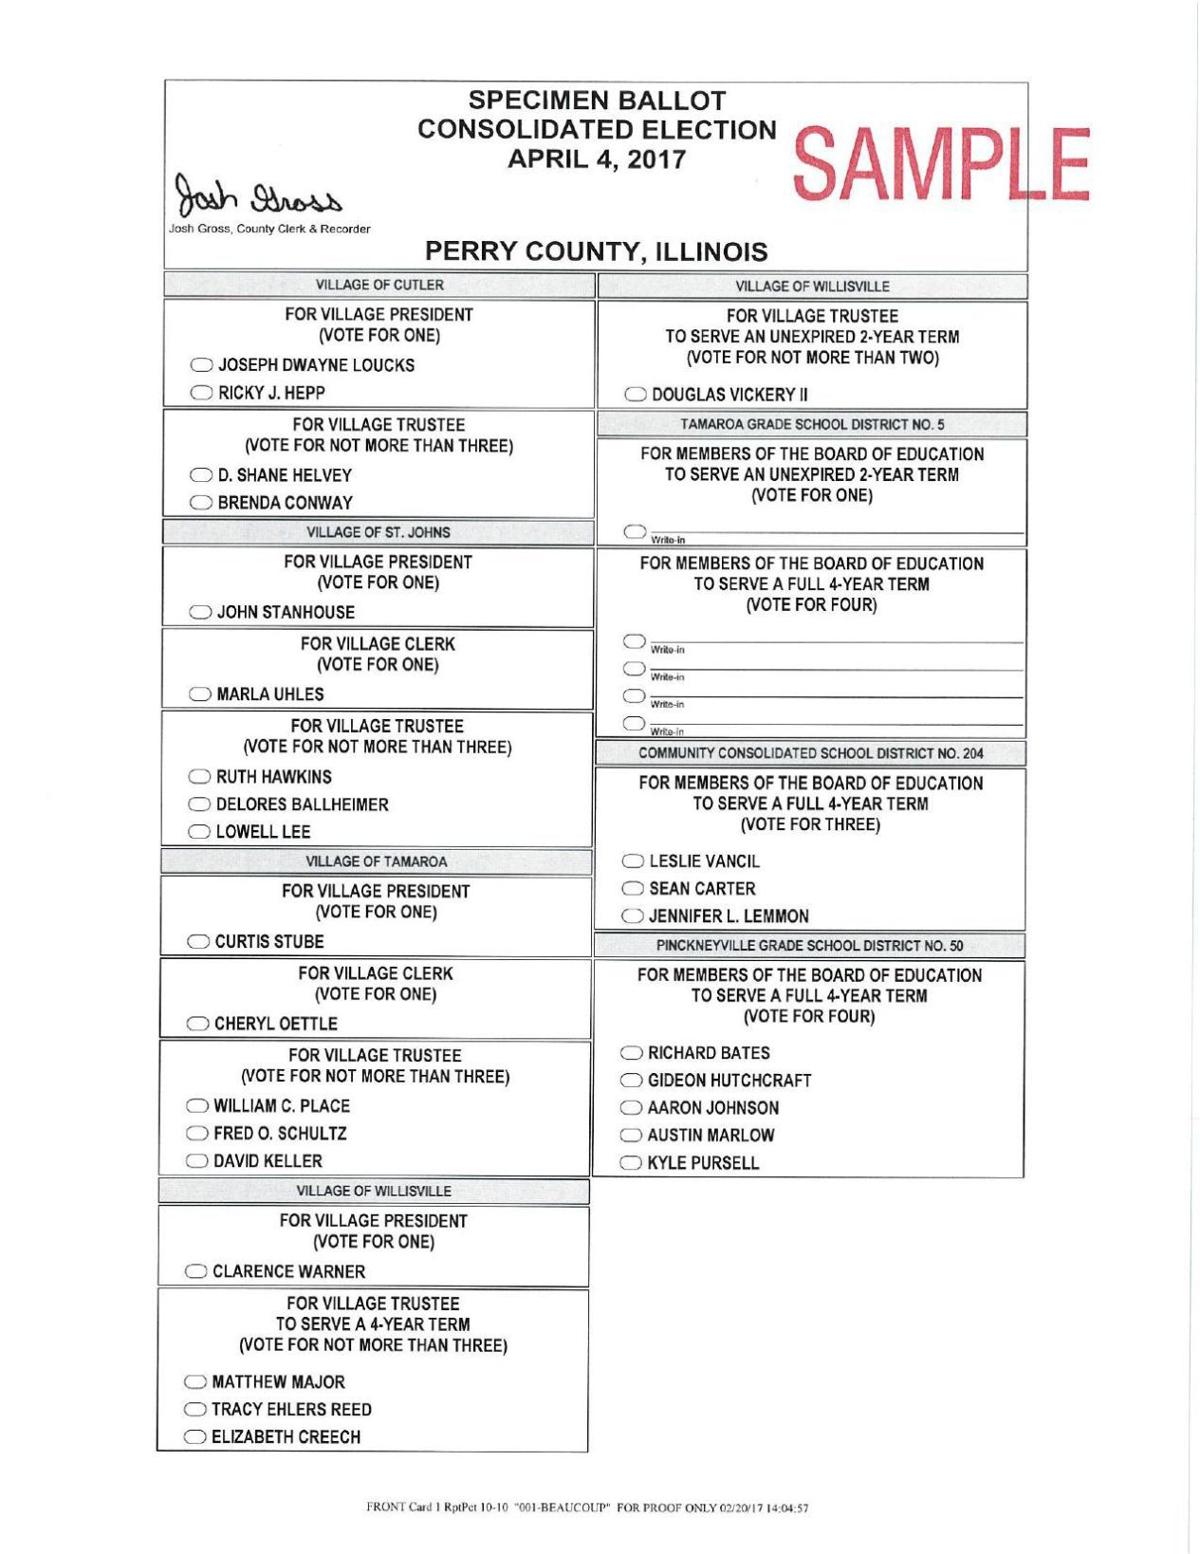 Perry County Sample Ballot